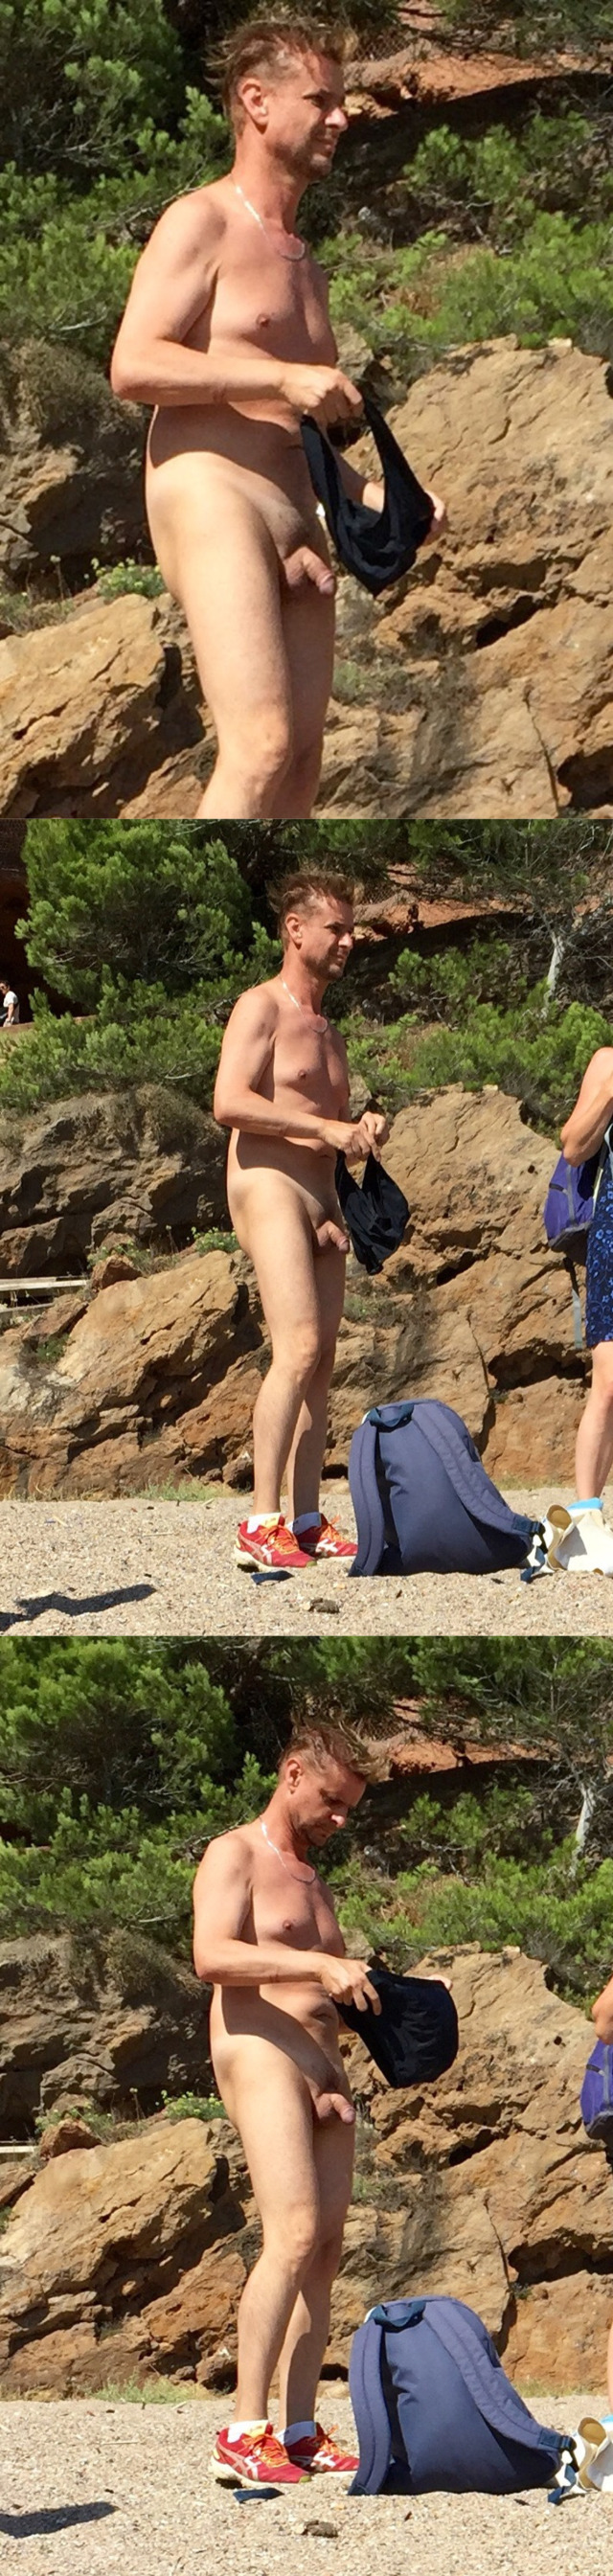 nudist beach spycam voyeur naked man